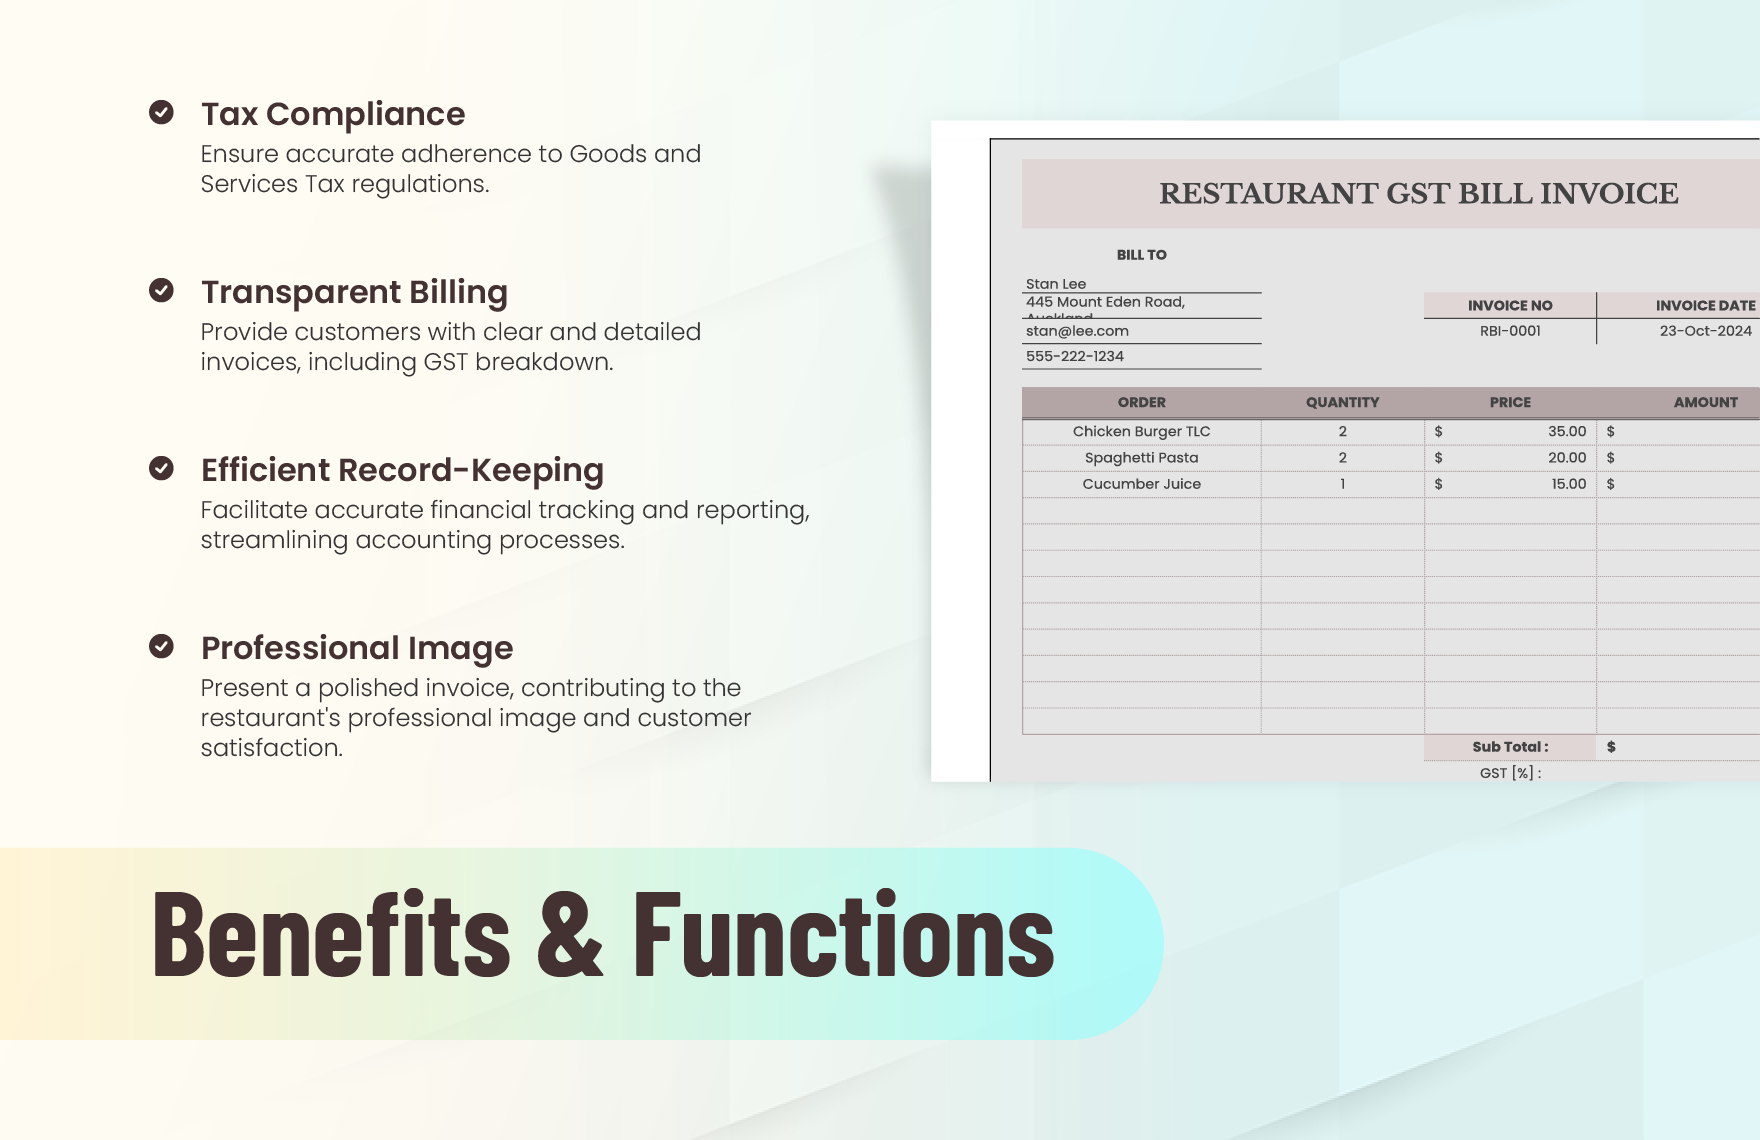 Restaurant GST Bill Invoice Template